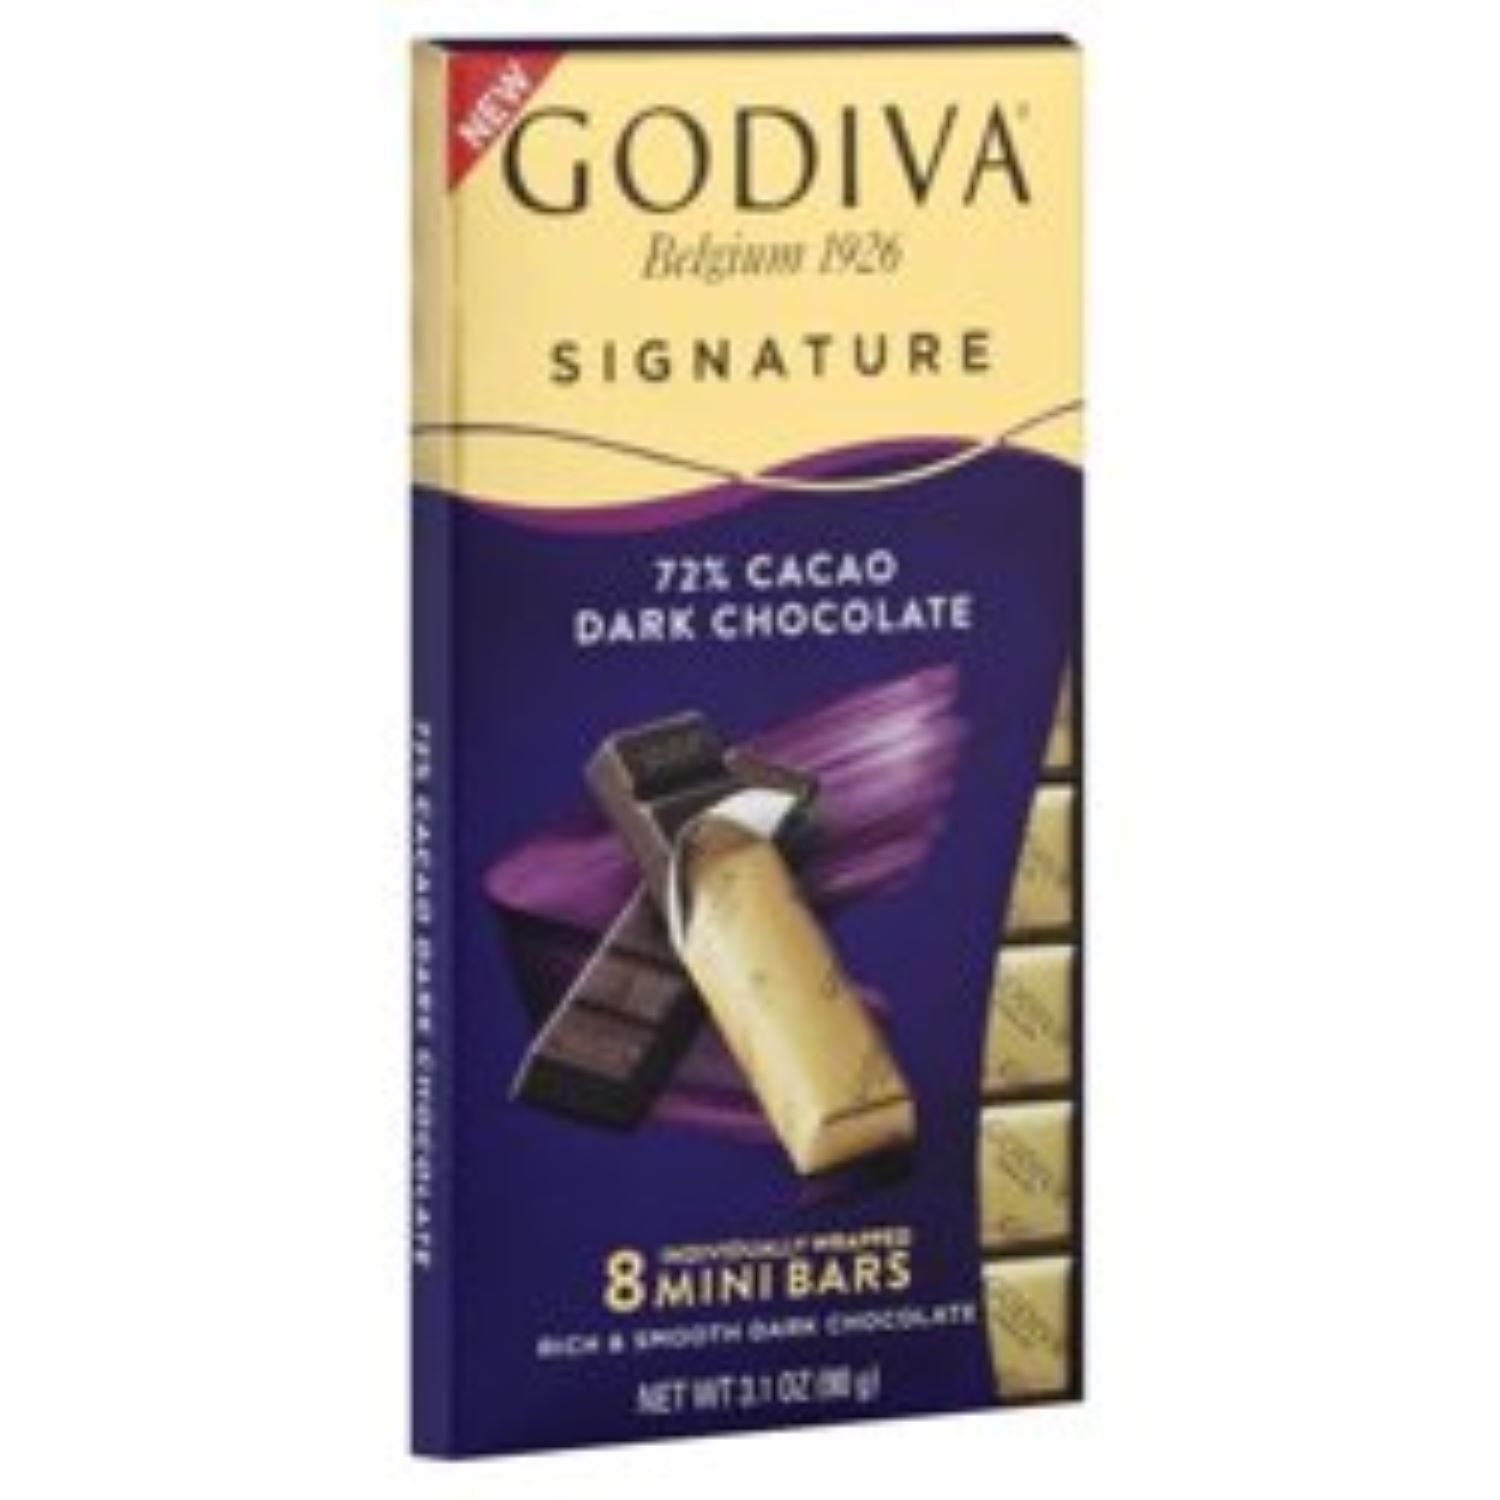 Godiva Signature Dark Chocolate, 8 Mini Bars, 3.1 oz - image 2 of 6